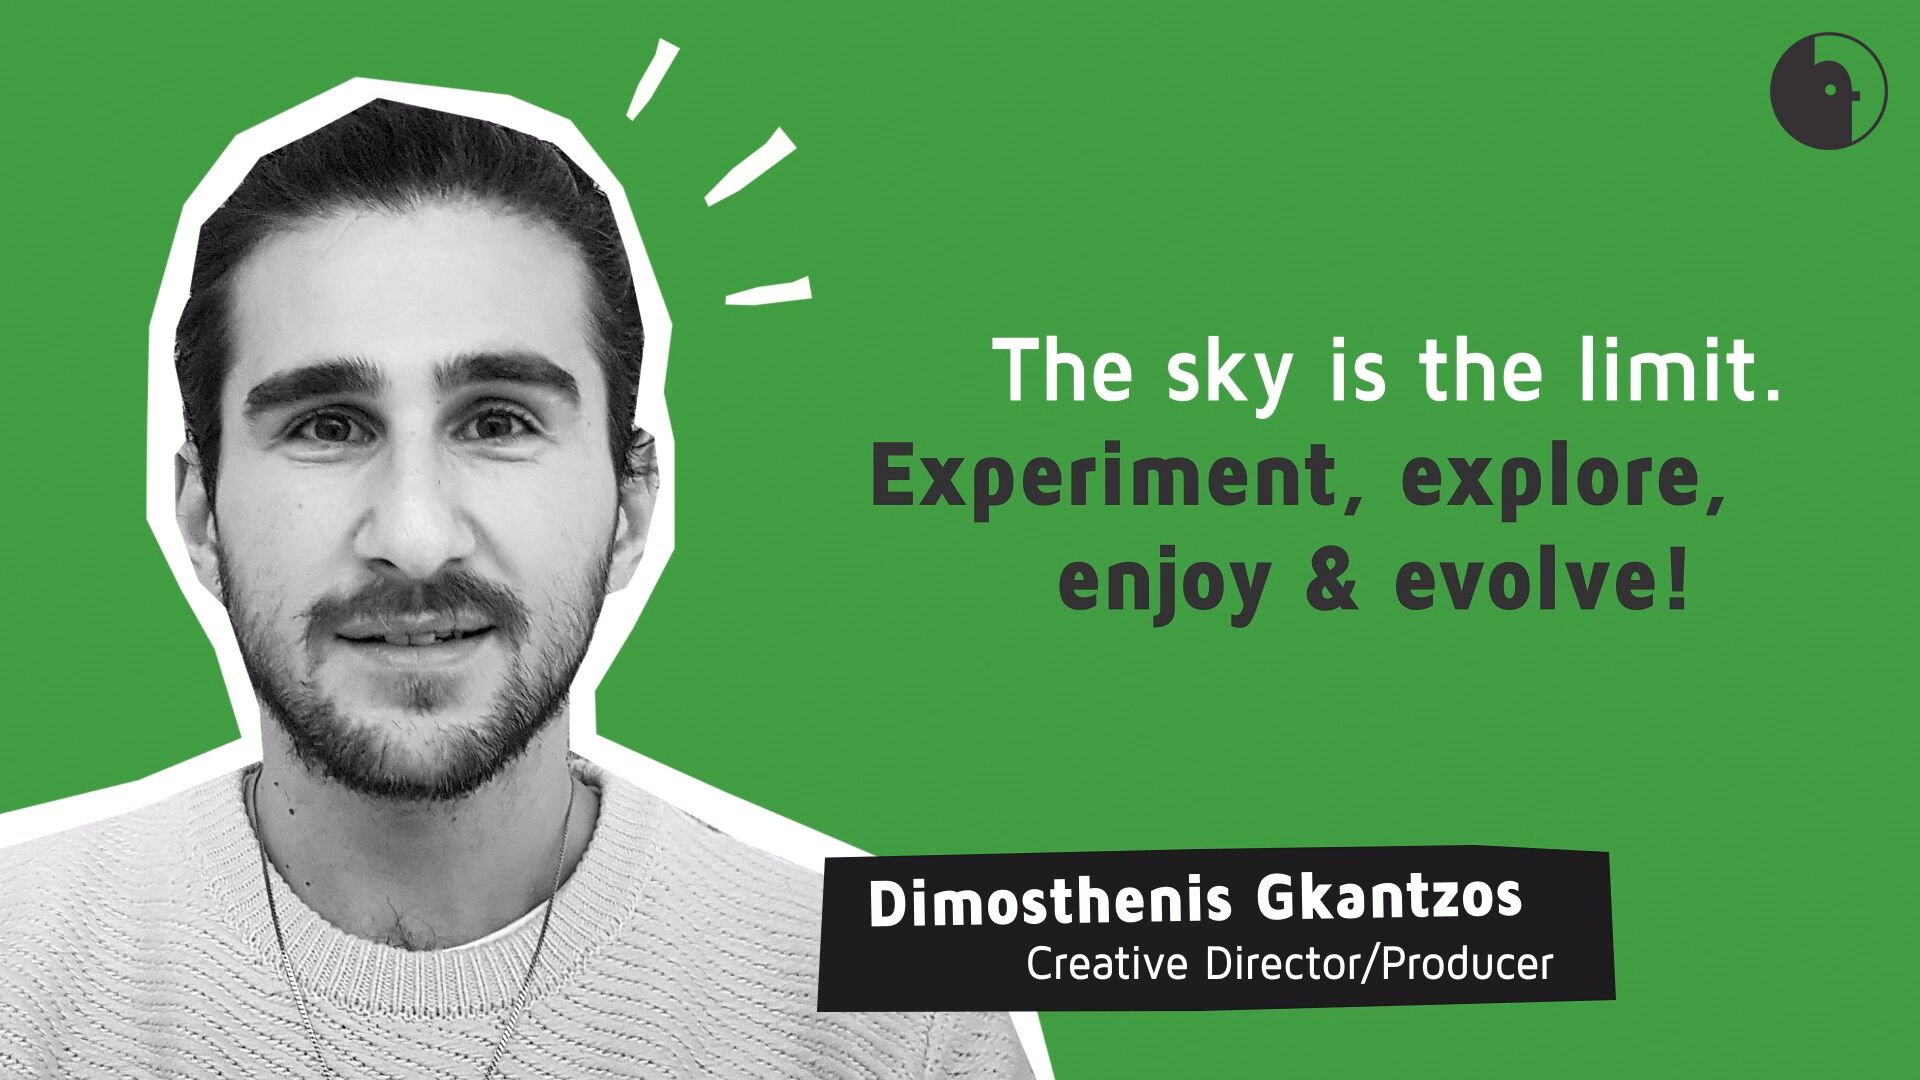 Creative Director/Producer Dimosthenis Gkantzos